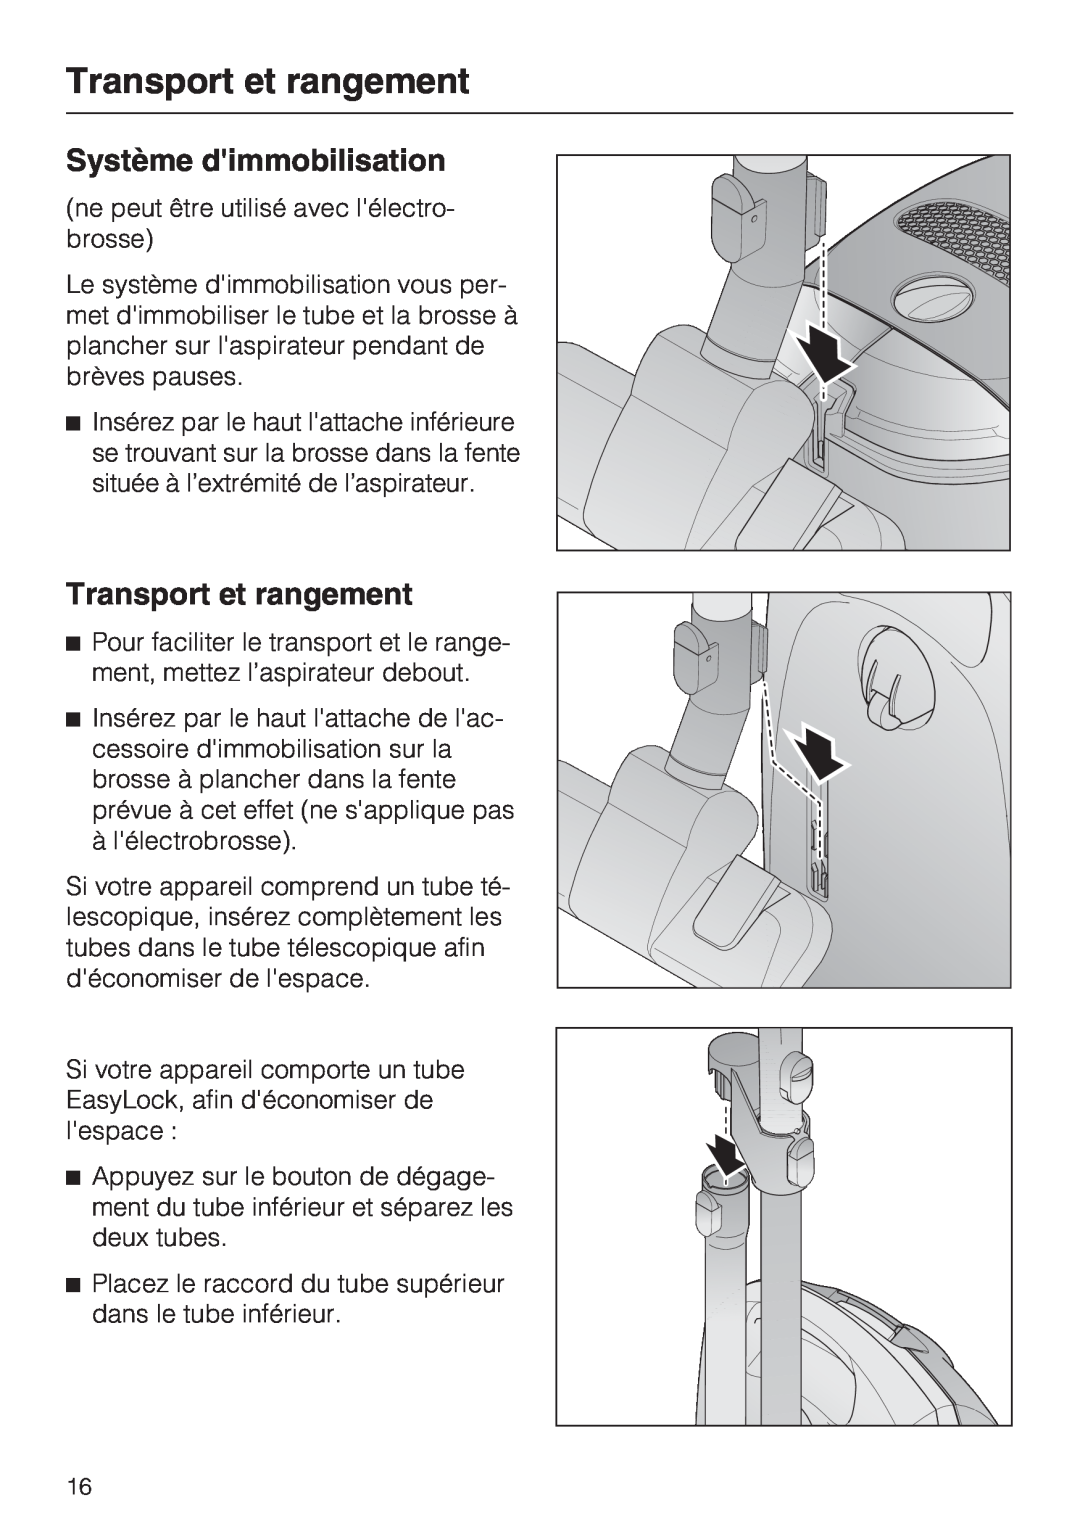 Miele S 2000 operating instructions Transport et rangement, Système dimmobilisation 